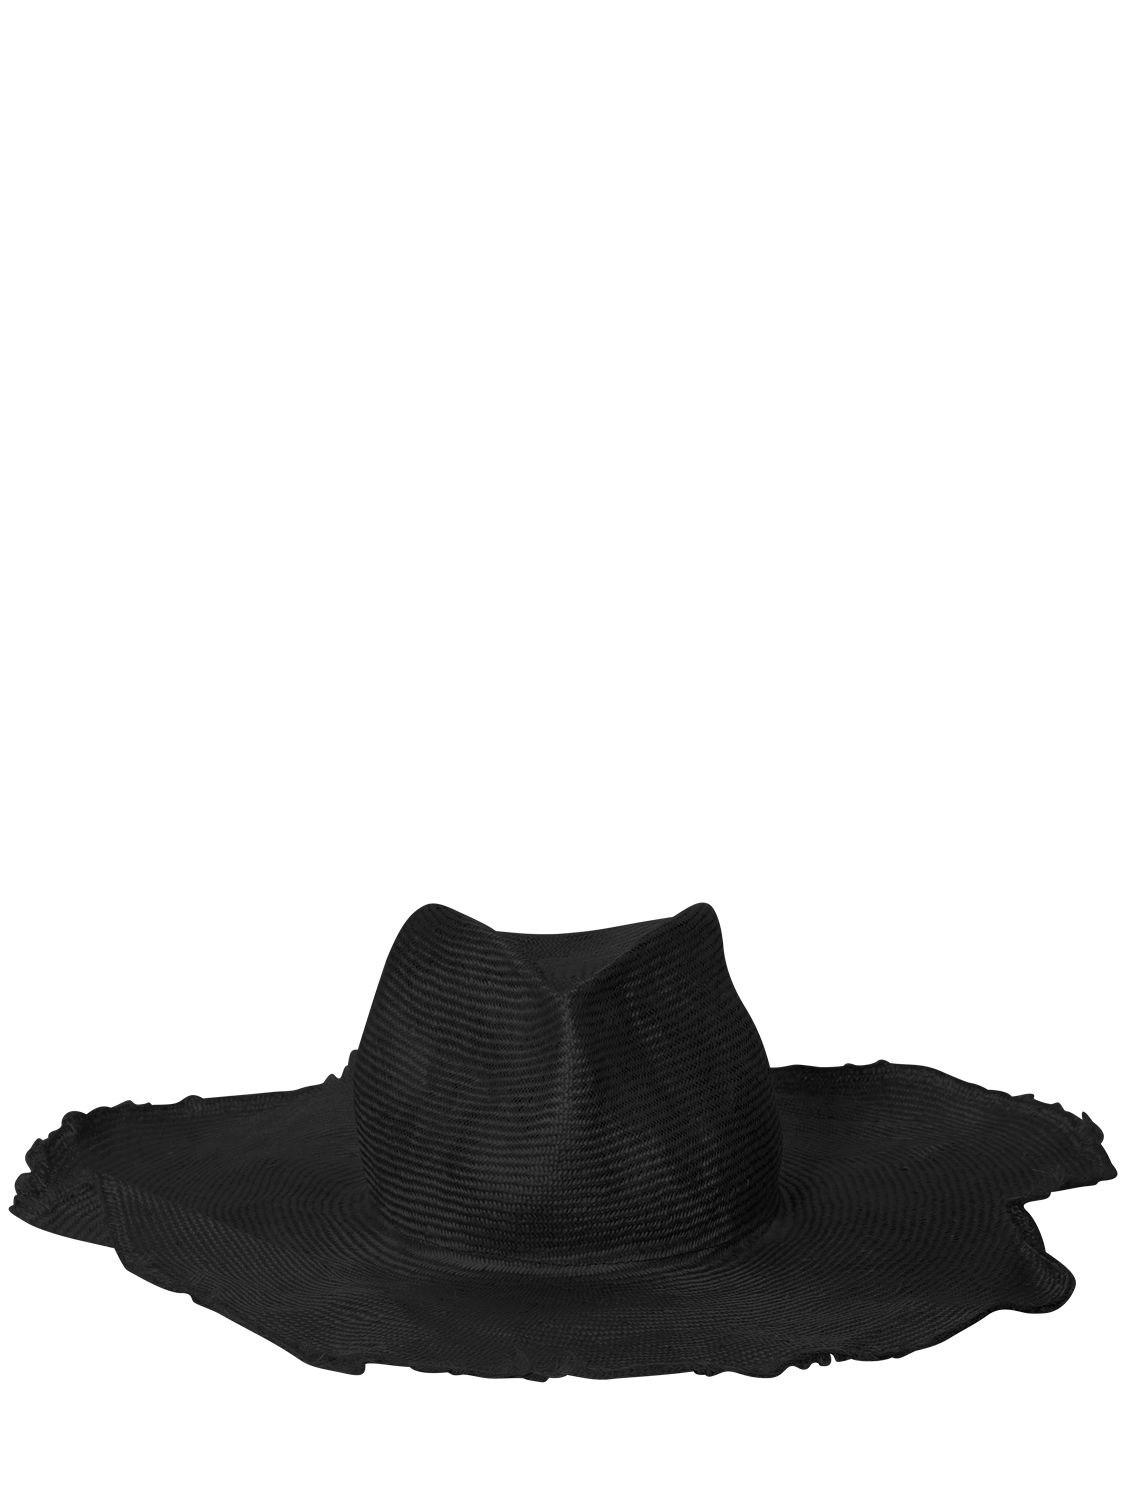 Ann Demeulemeester Straw Hat W/ Tulle Veil in Black - Lyst